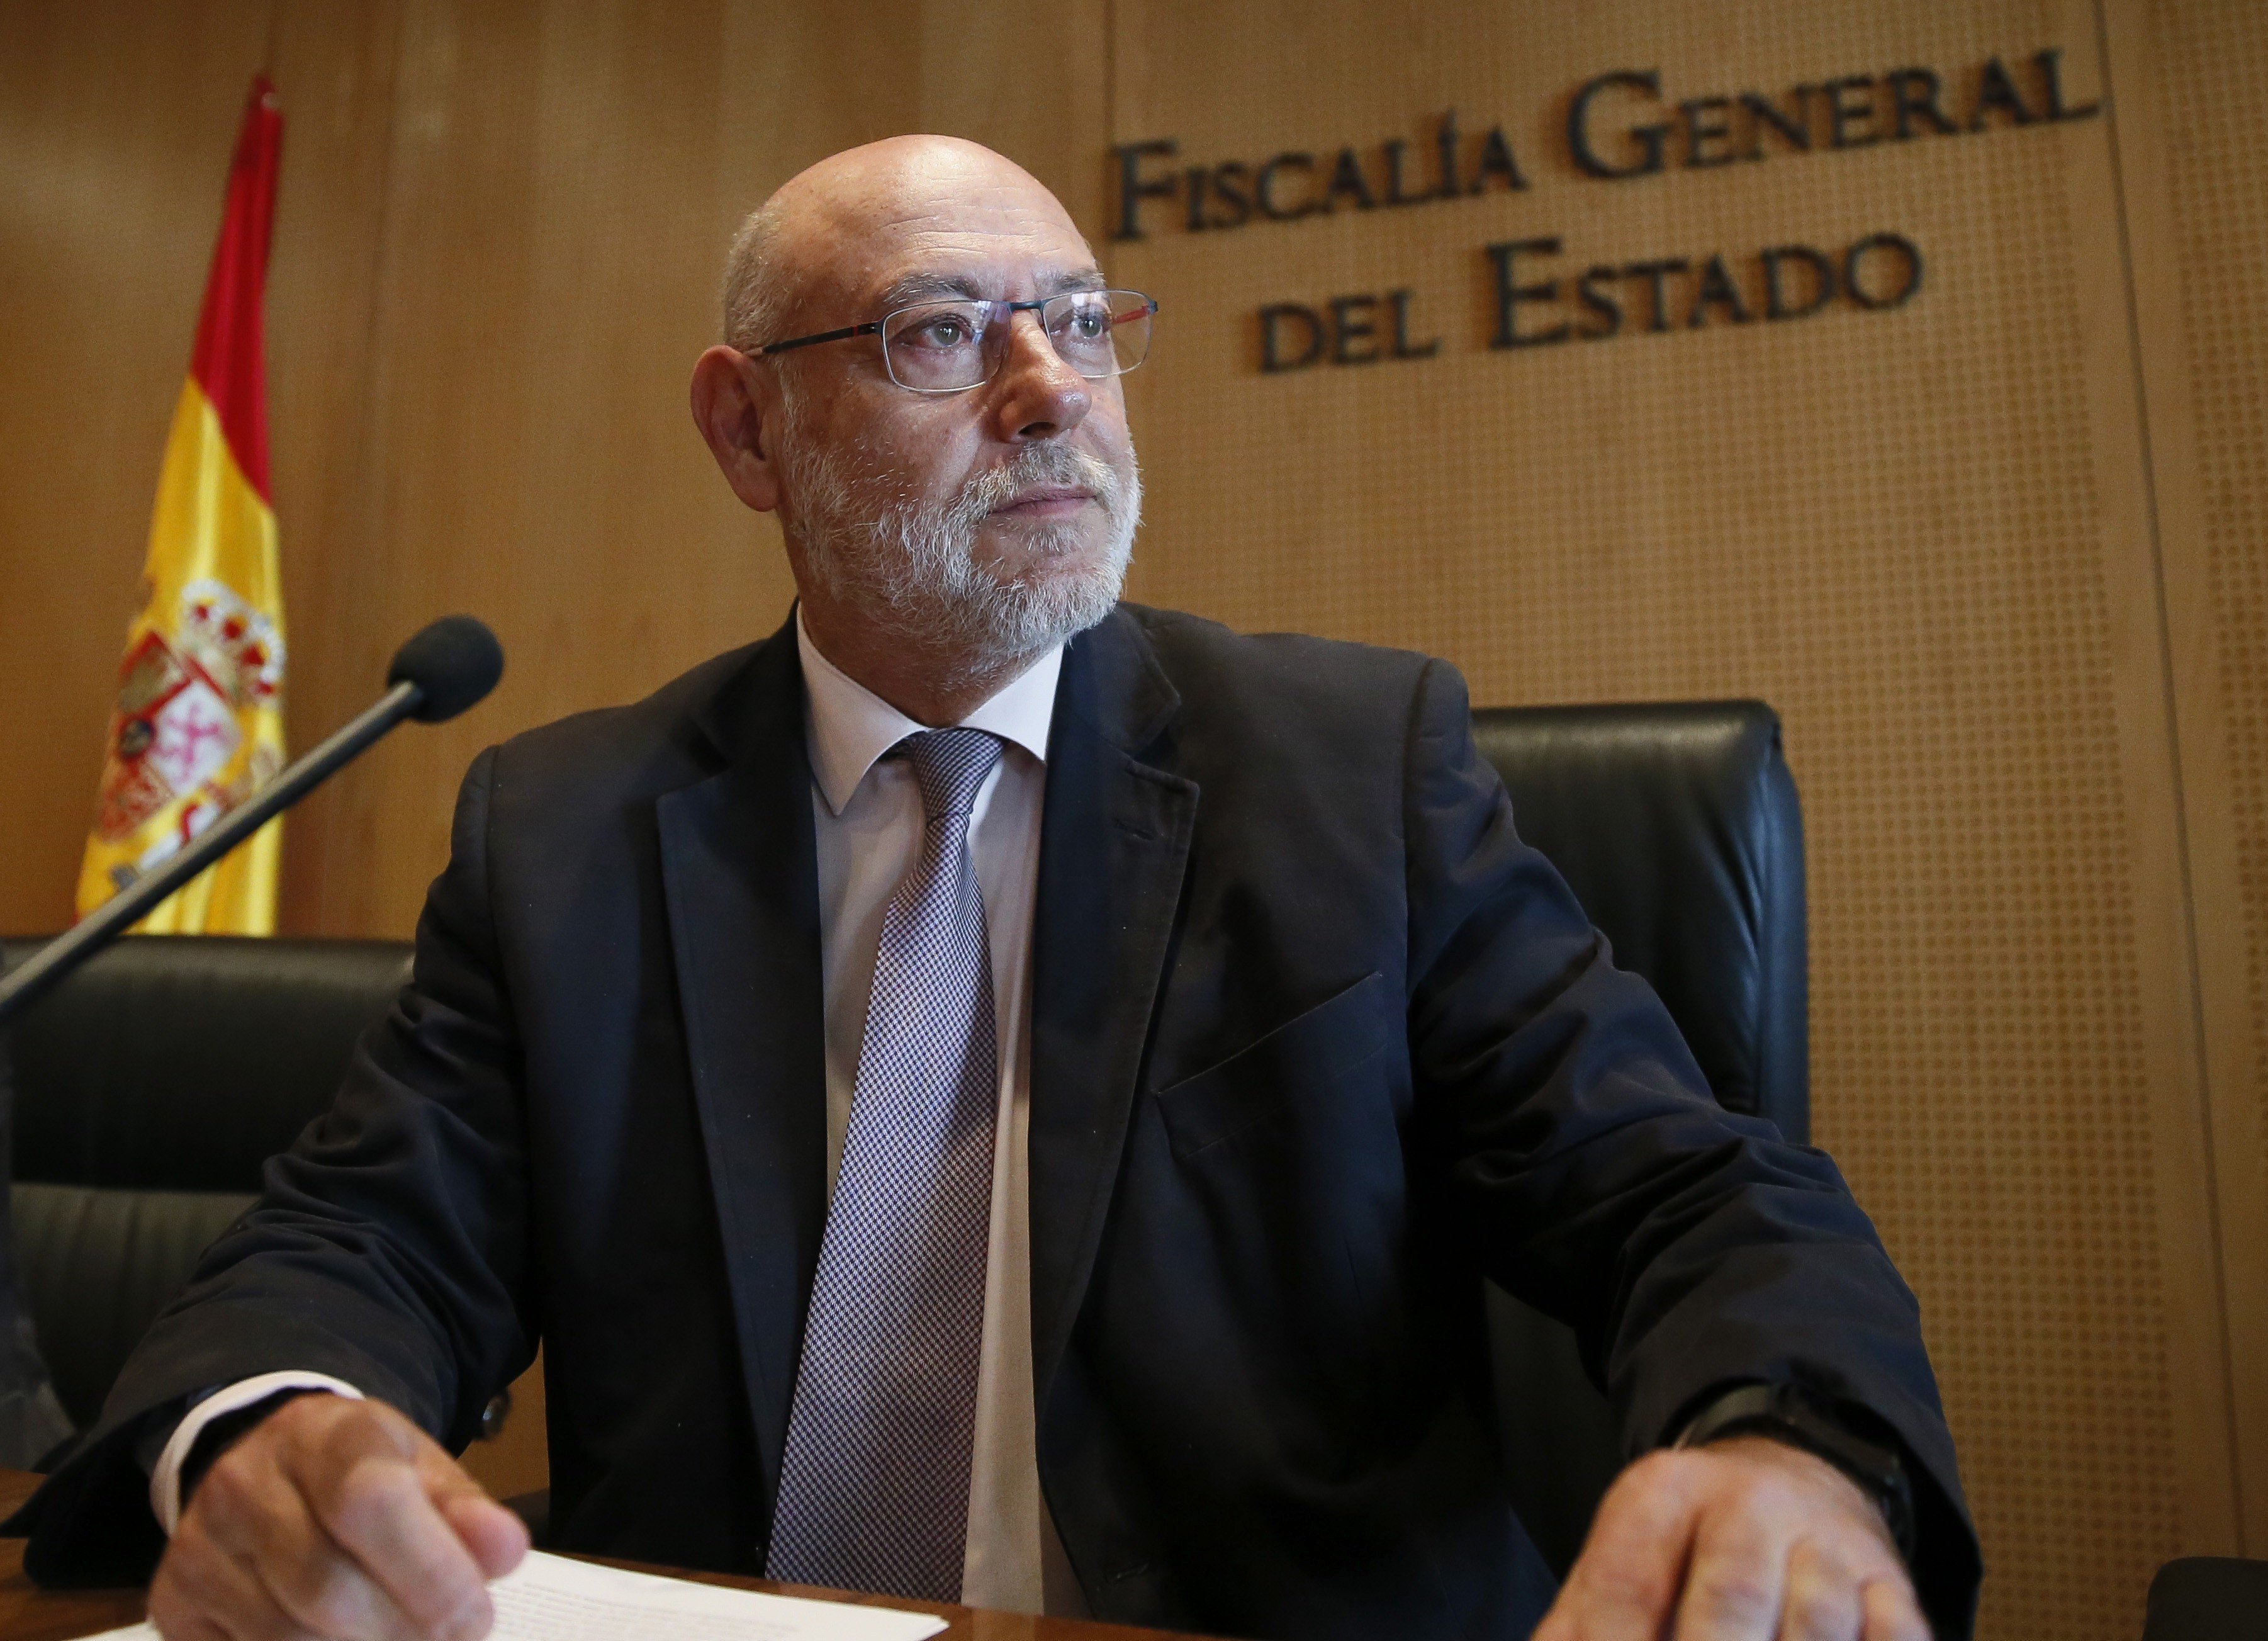 El fiscal que quería encarcelar a Puigdemont